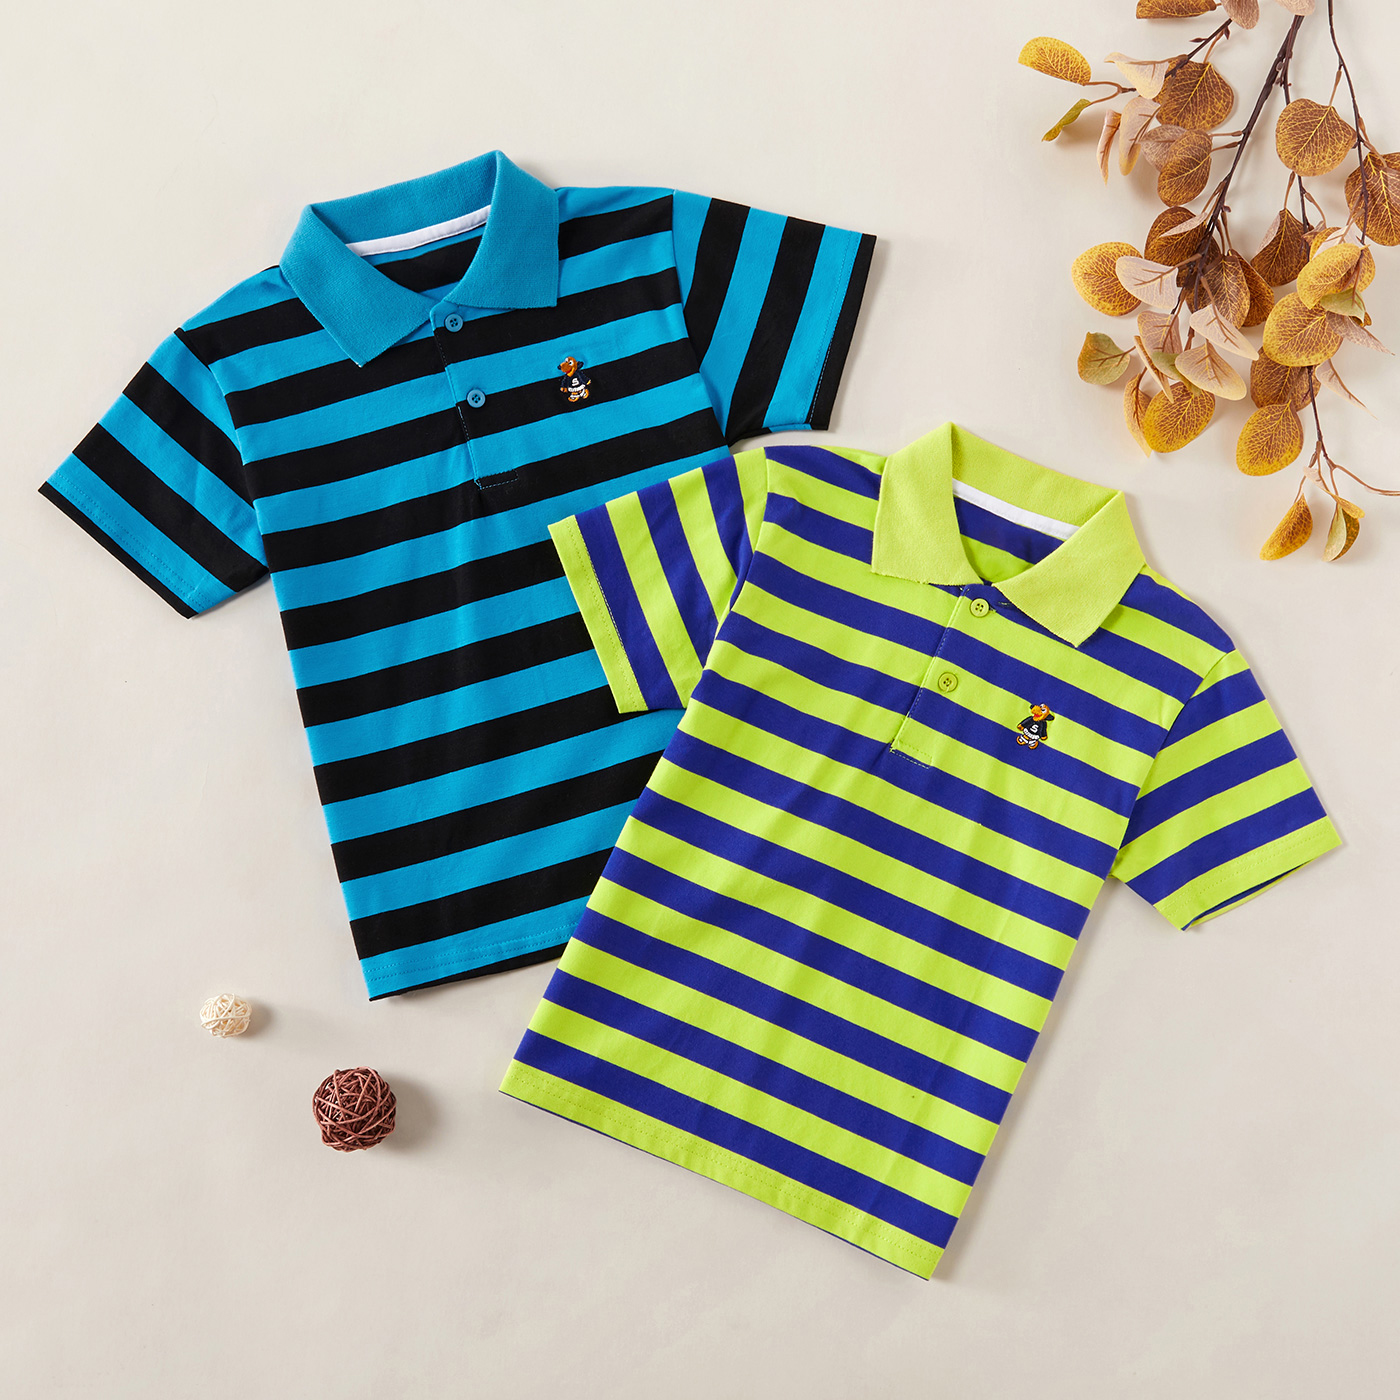 Fashionable Striped Polo Shirts